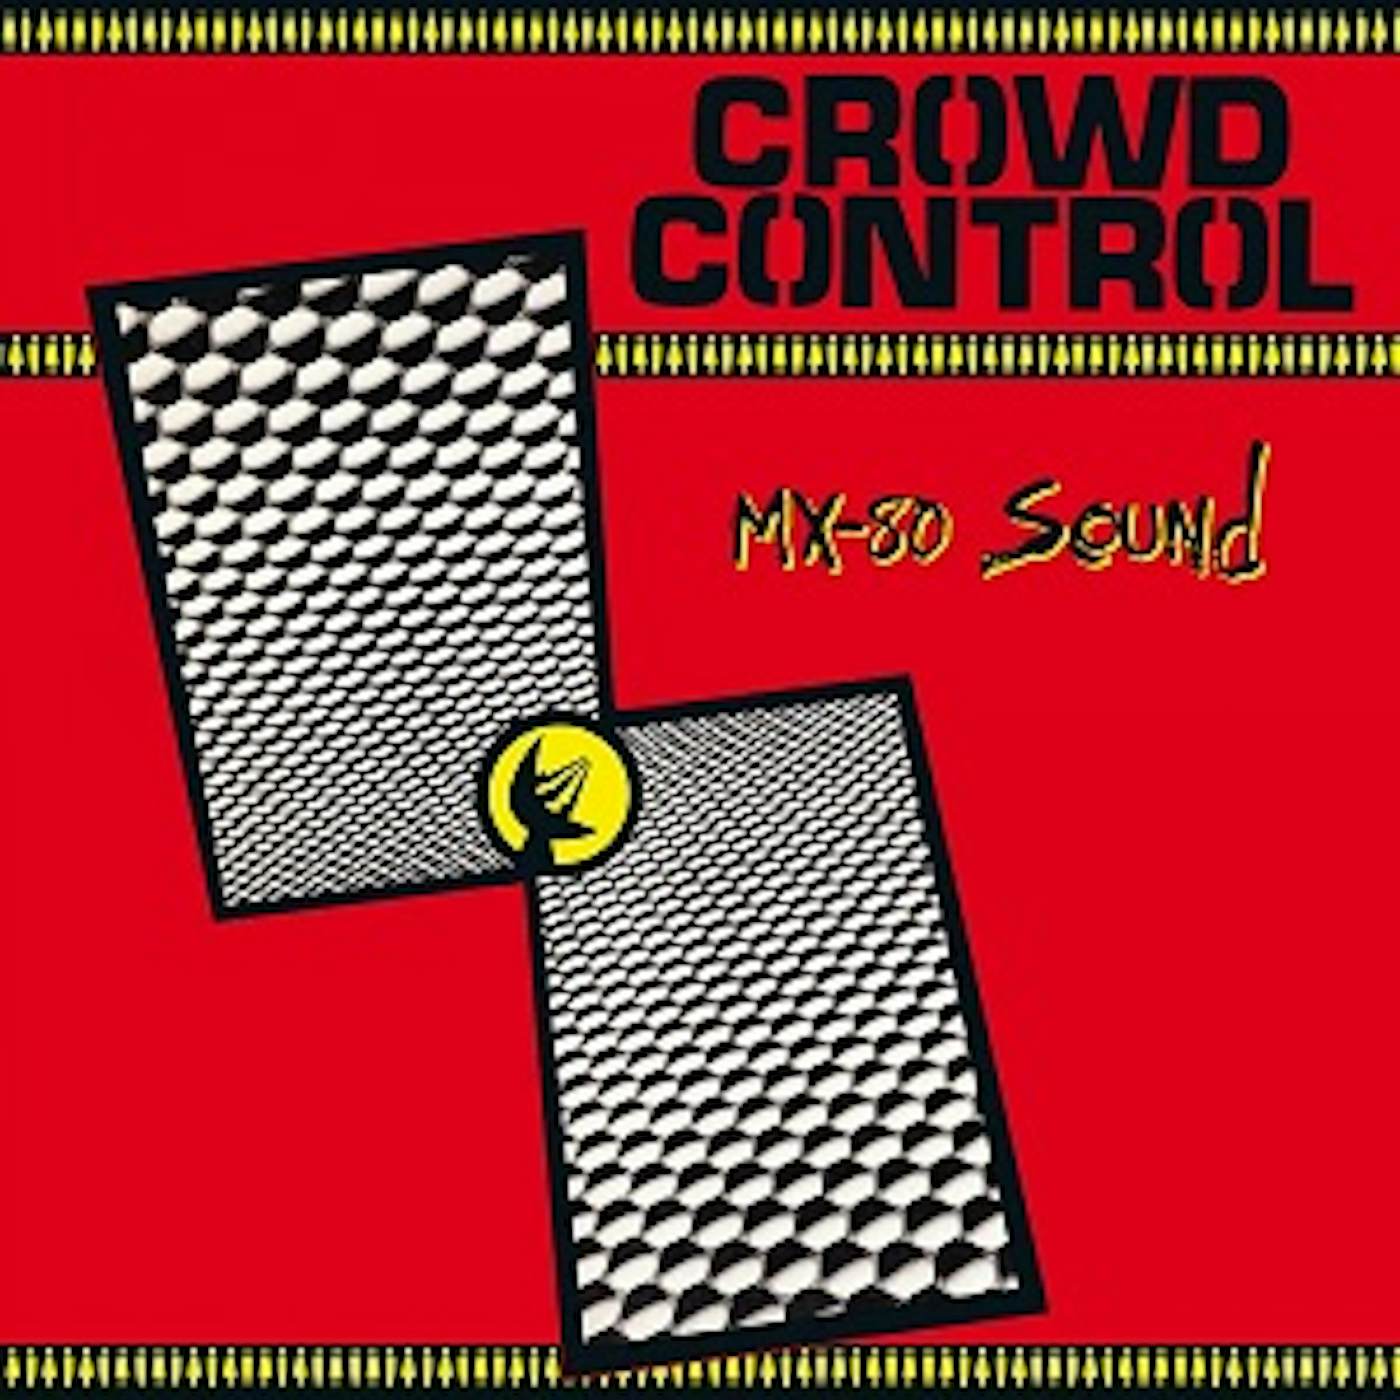 MX-80 Sound Crowd Control Vinyl Record